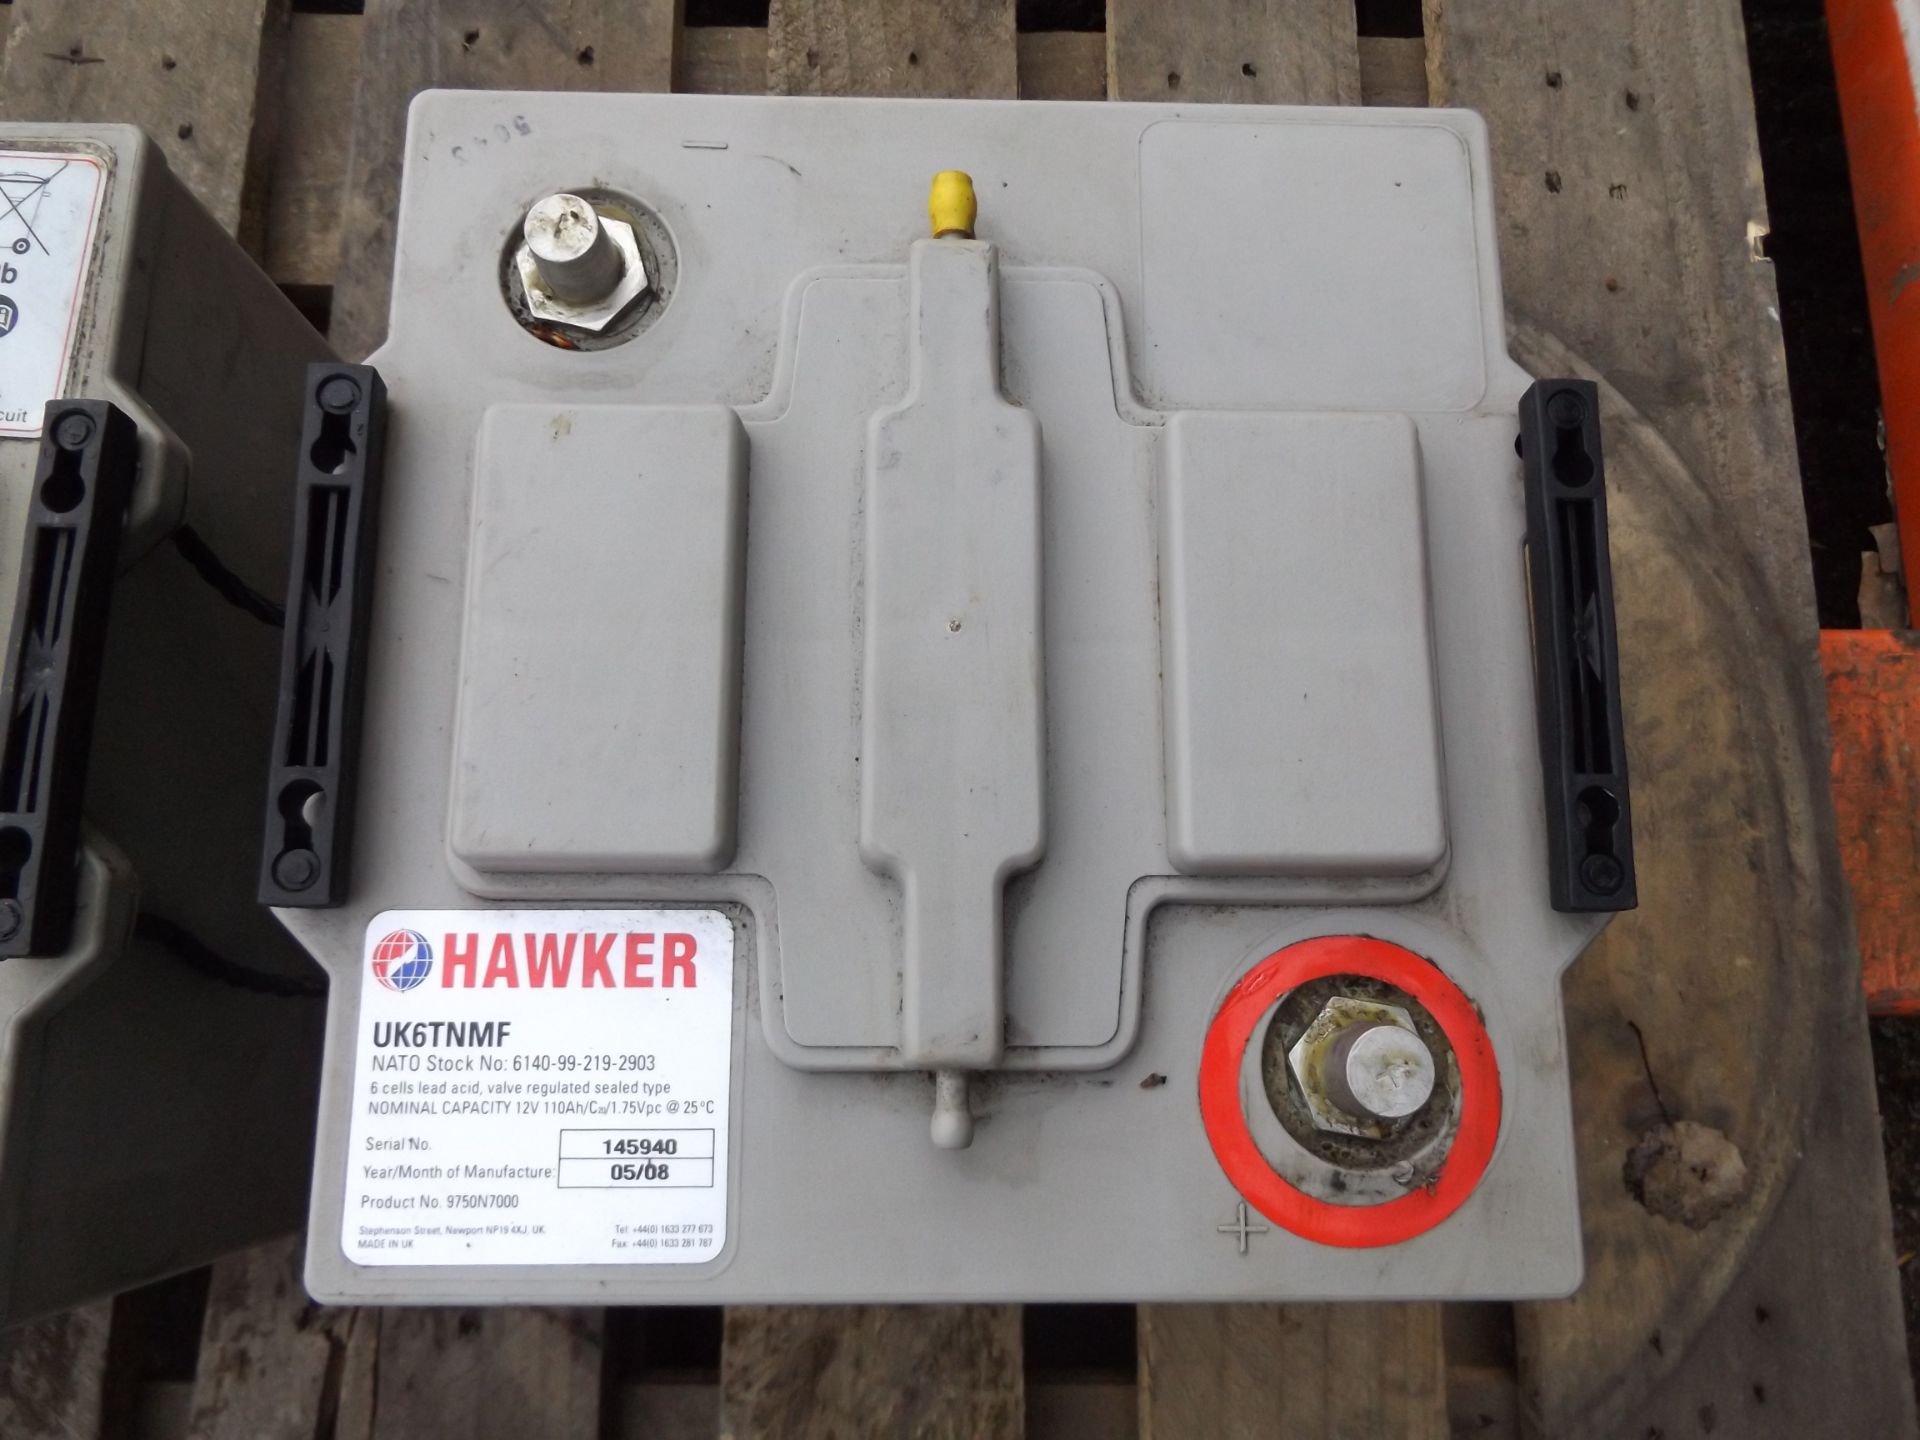 2 x Hawker UK6TNMF Rechargable Batteries - Image 3 of 5